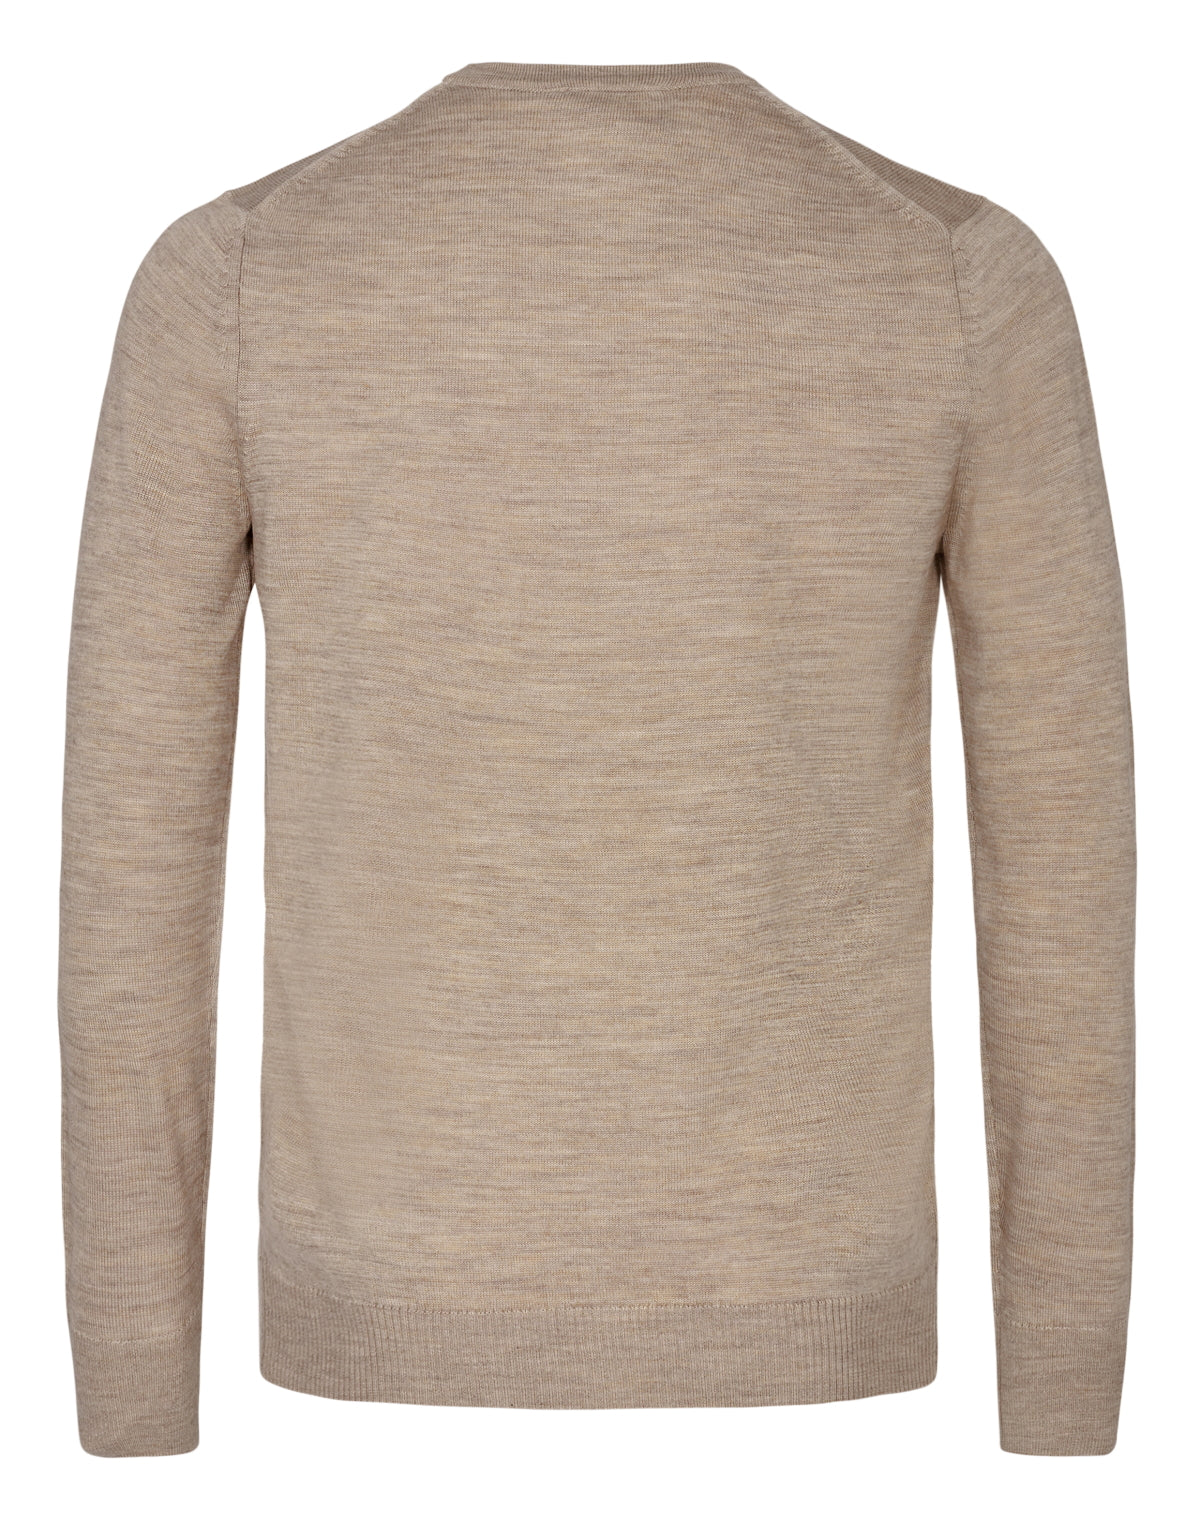 & Stengade Jupiter Textured Wool Blend Crew Sweater Seattle Thread Company